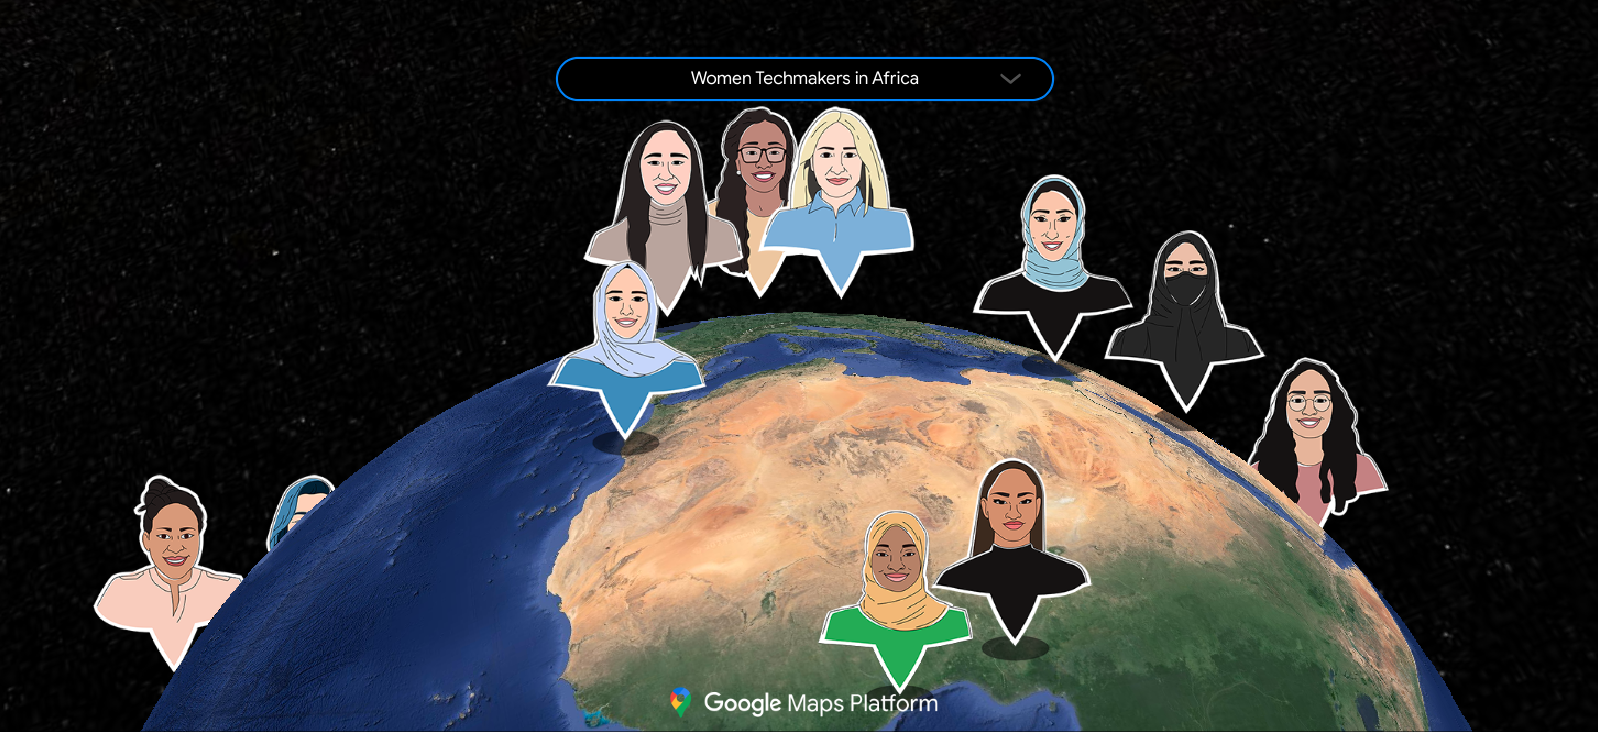 Women Techmakers アンバサダーのグローバル ネットワークを示す地図。各国に応じた多様な人々の集団が地図上に配置されている。